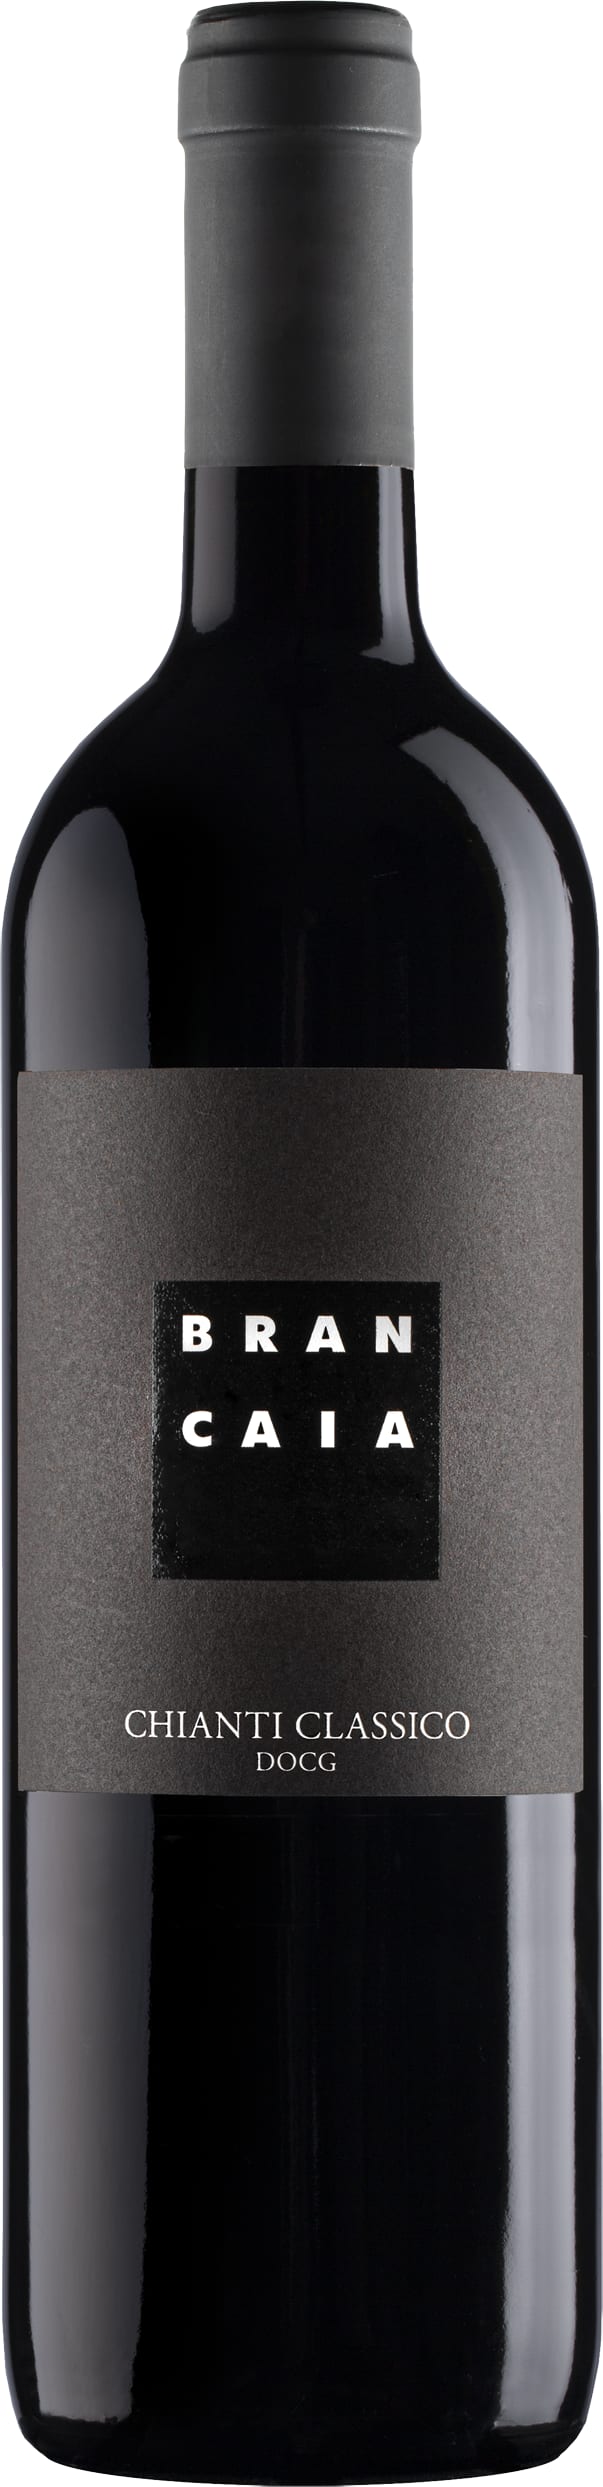 Casa Brancaia Chianti Classico 2022 75cl - Buy Casa Brancaia Wines from GREAT WINES DIRECT wine shop